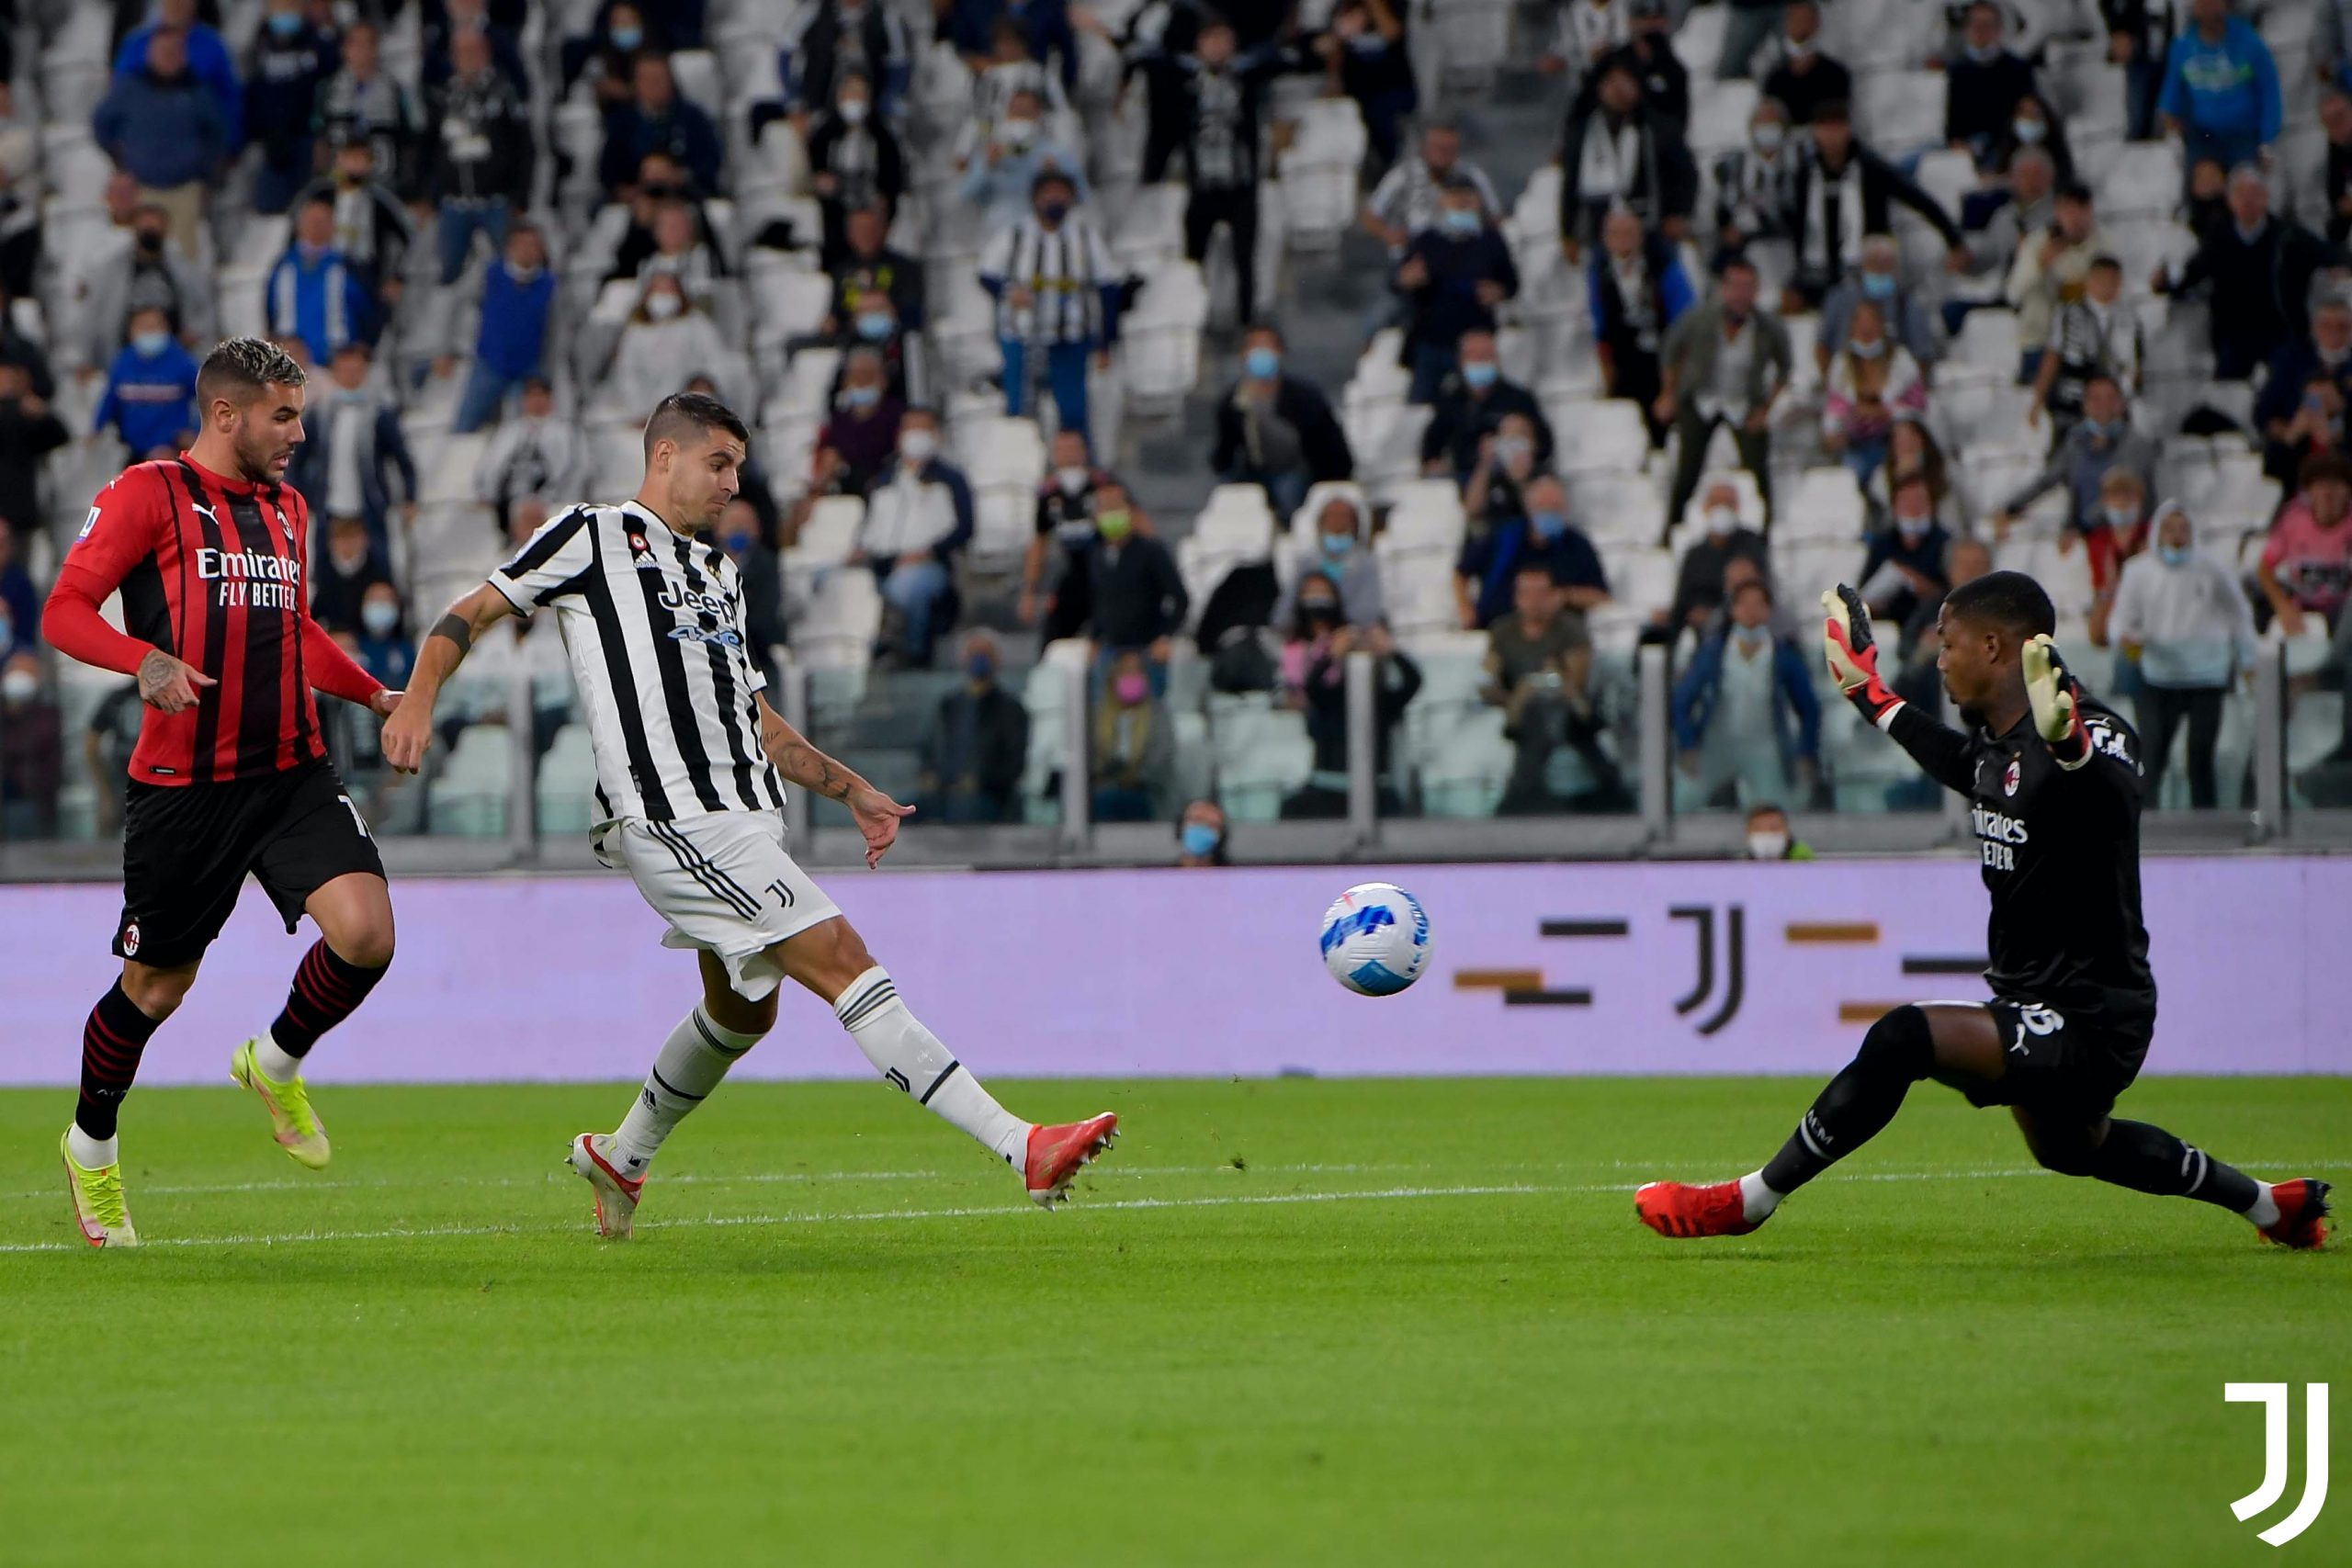 Juventus empata com o Milan e amplia crise no Italiano